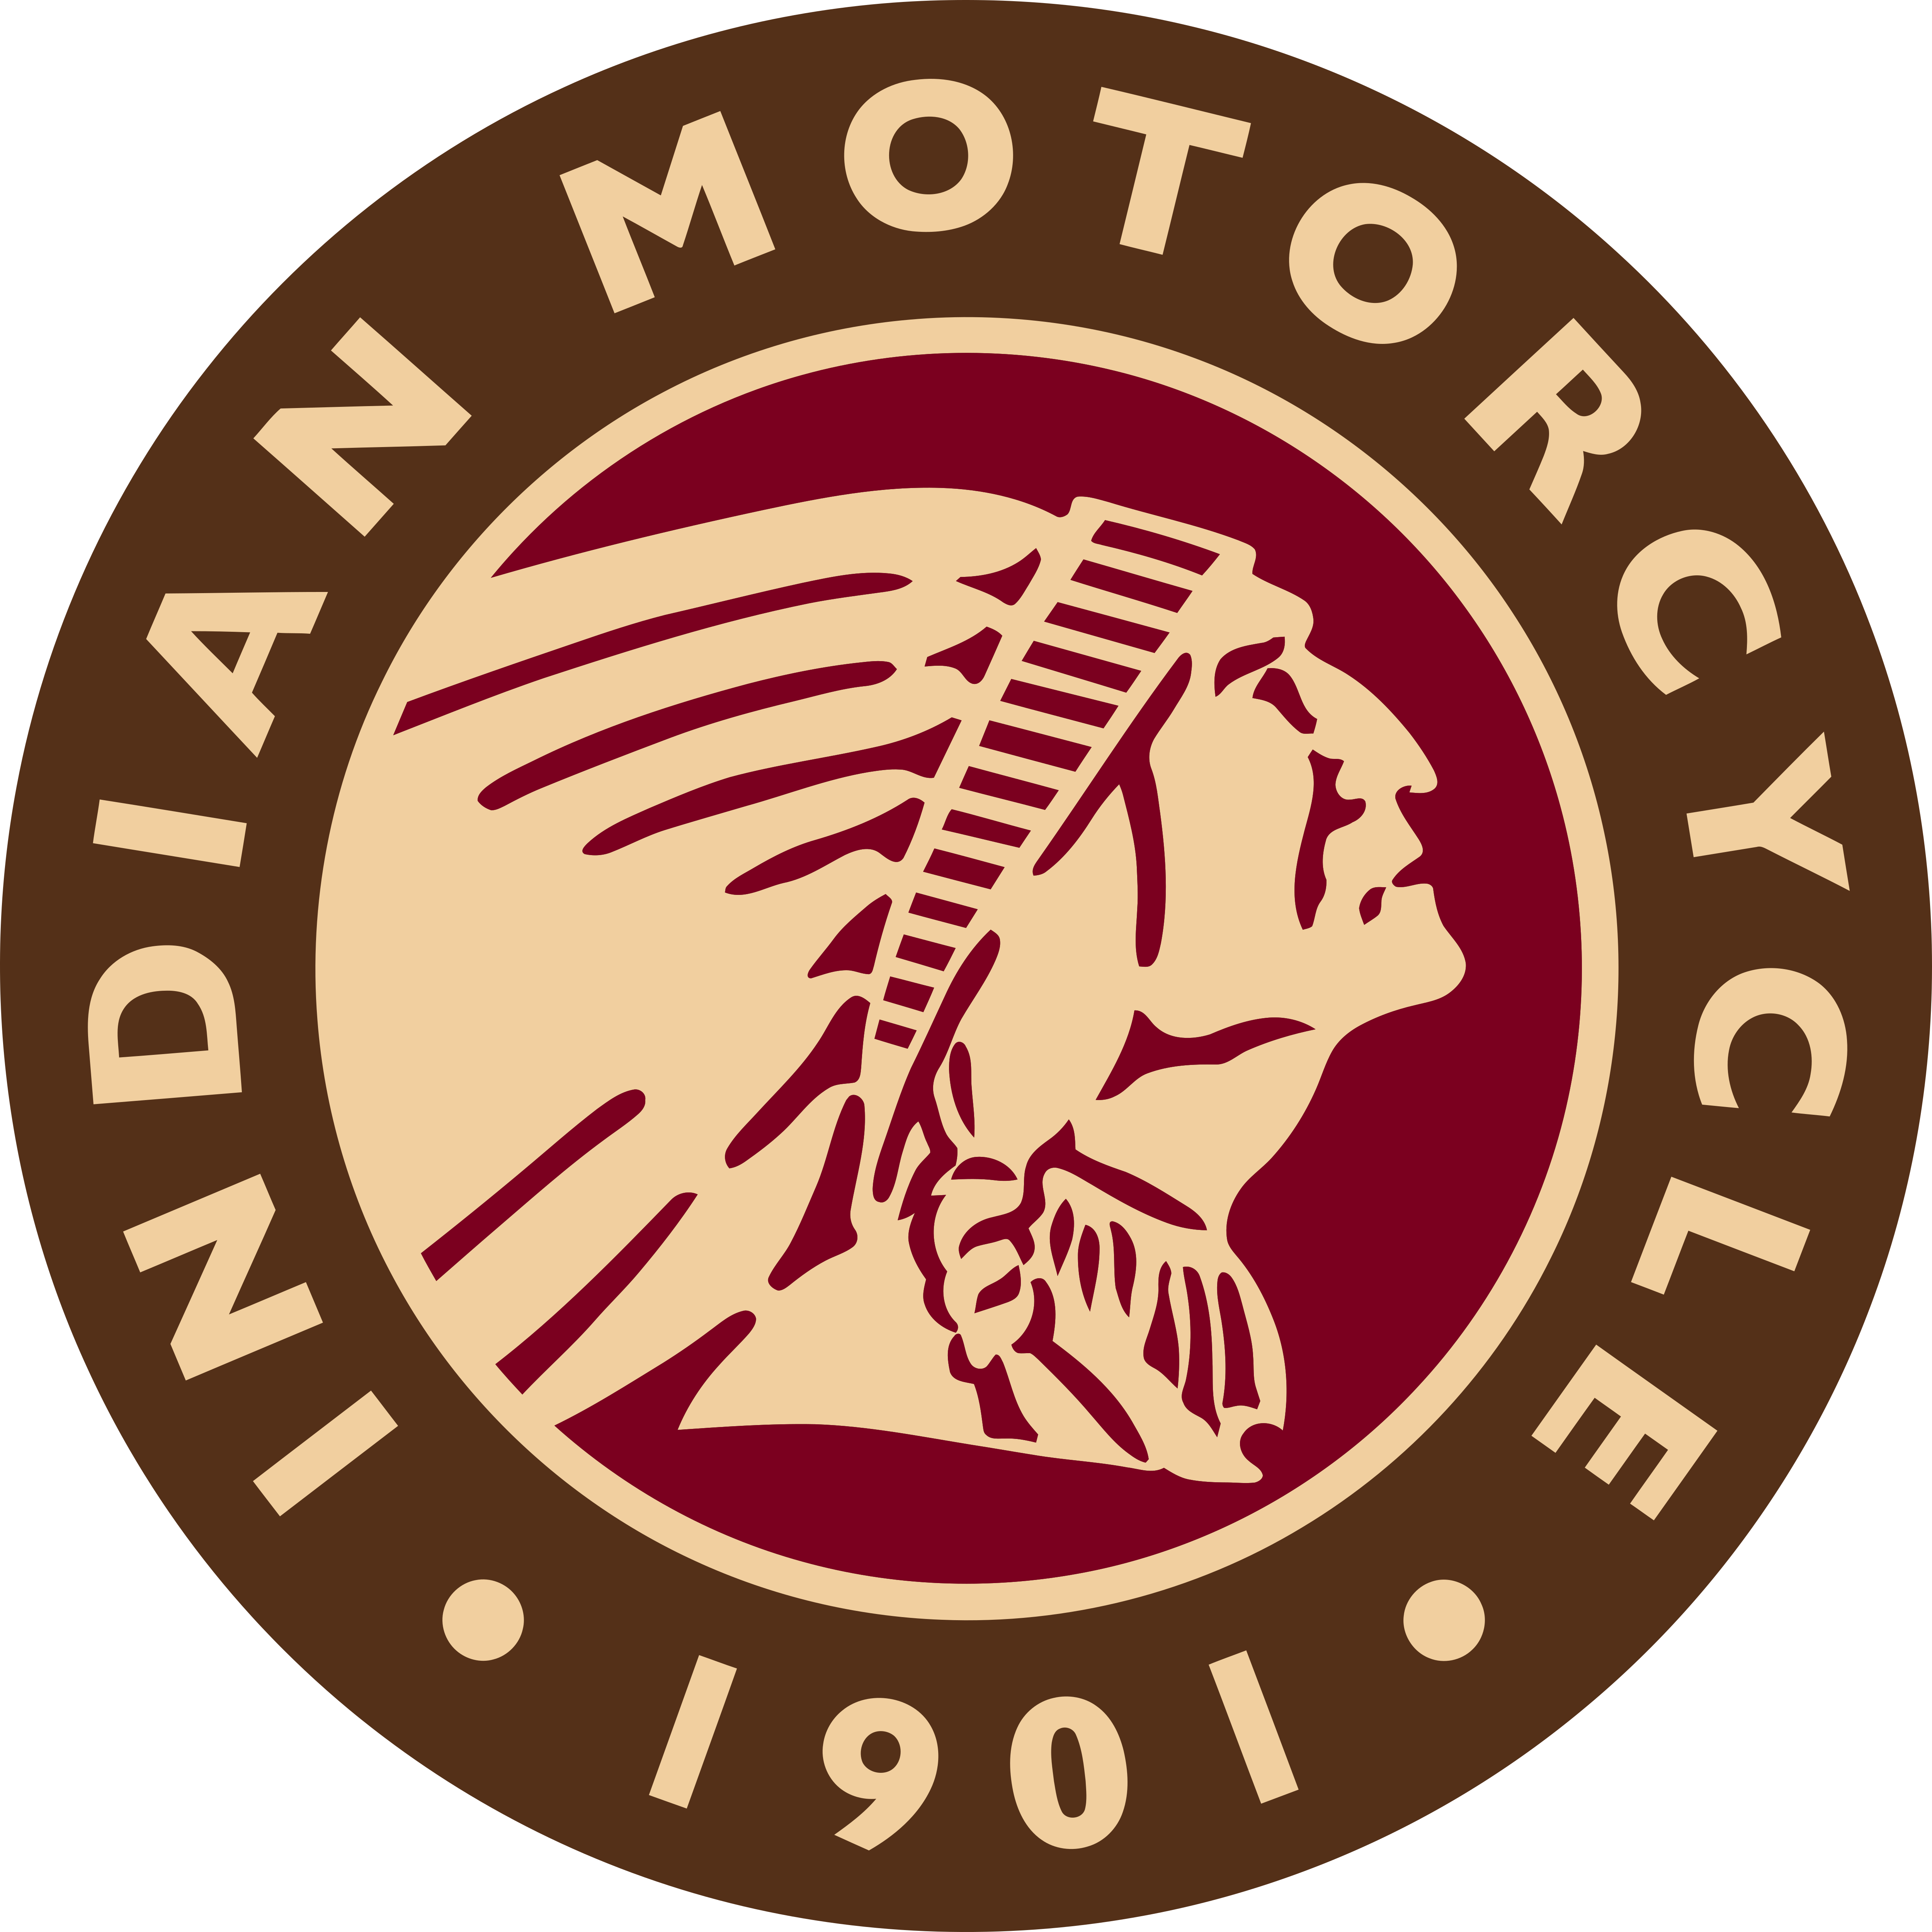  Indian  Motor Cycles  Logos  Download